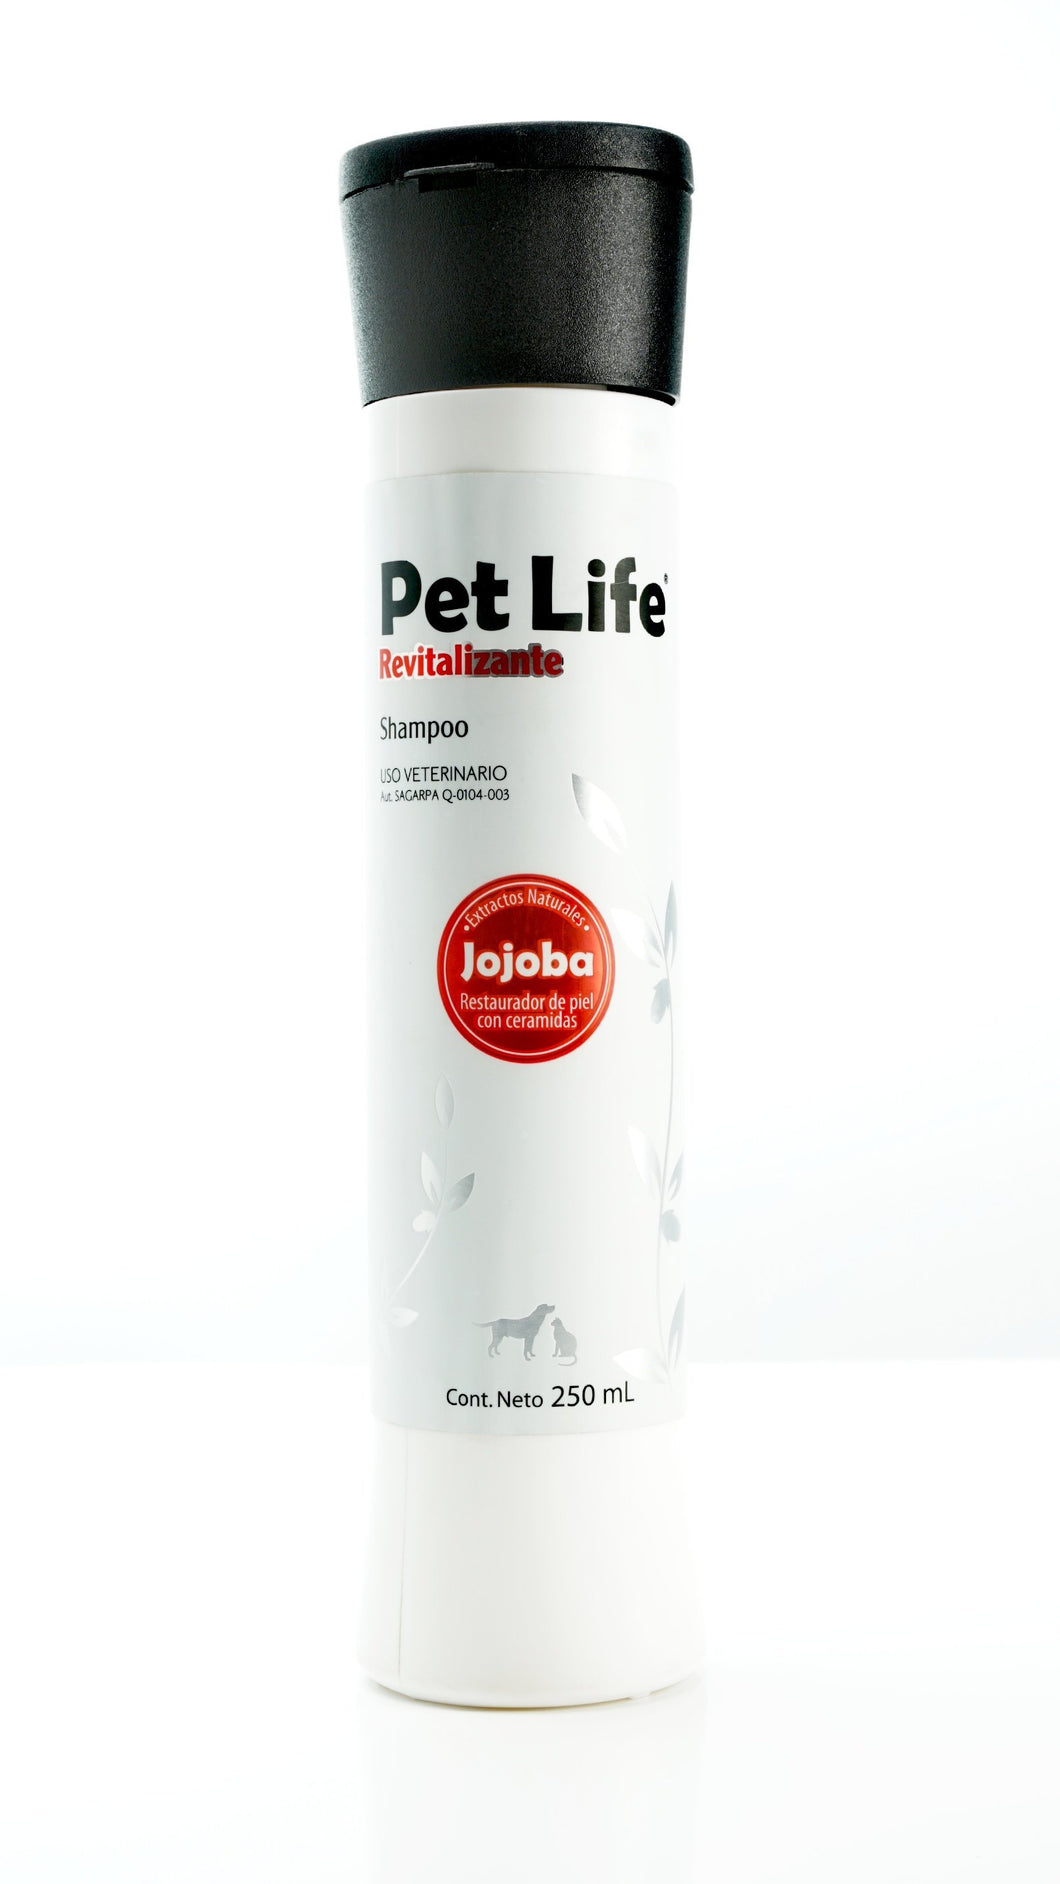 Shampoo Pet life Jojoba revitalizante 250ml